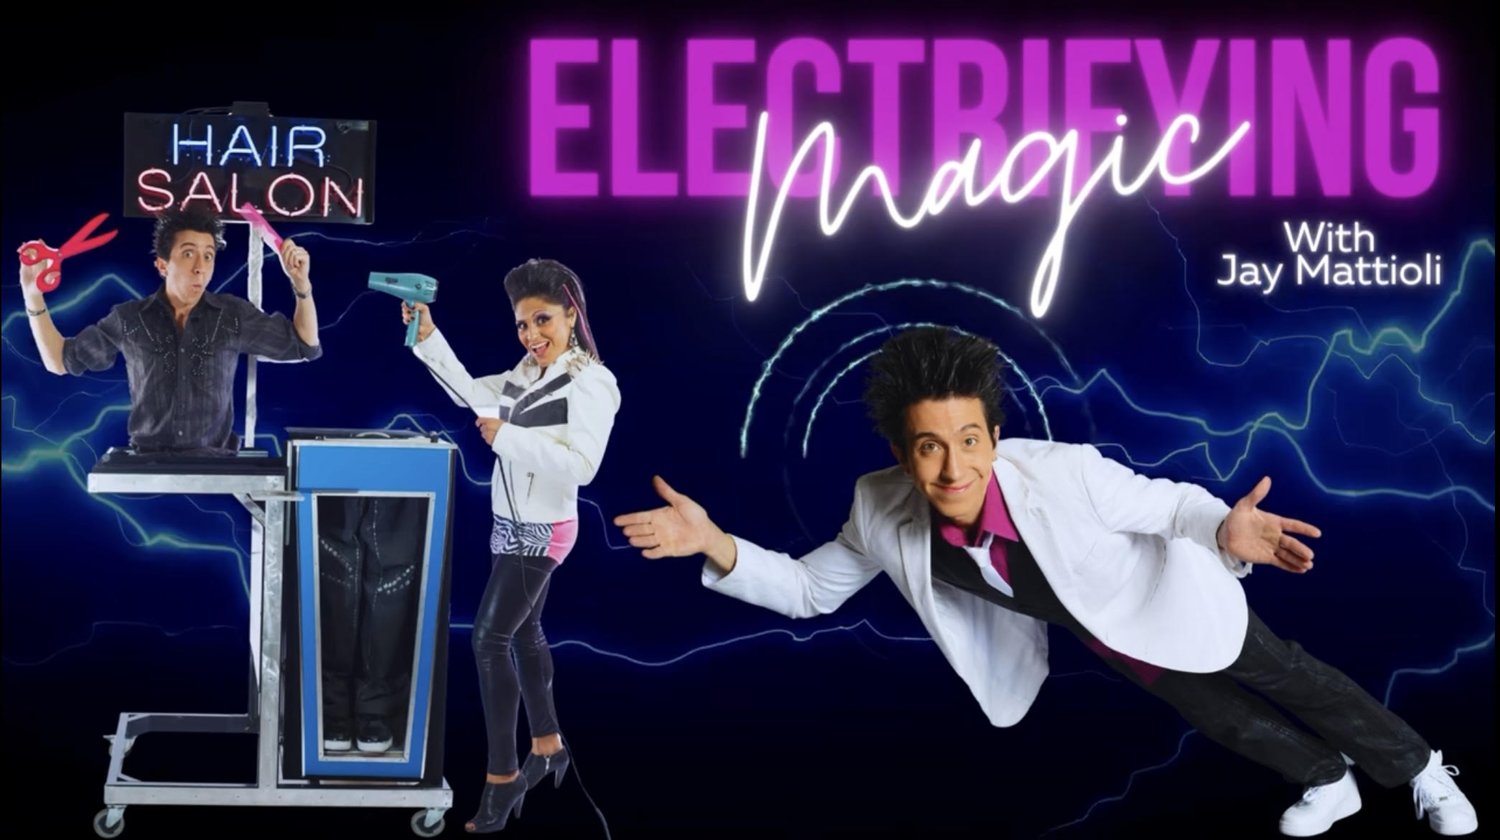 Electrify Magic Show Image